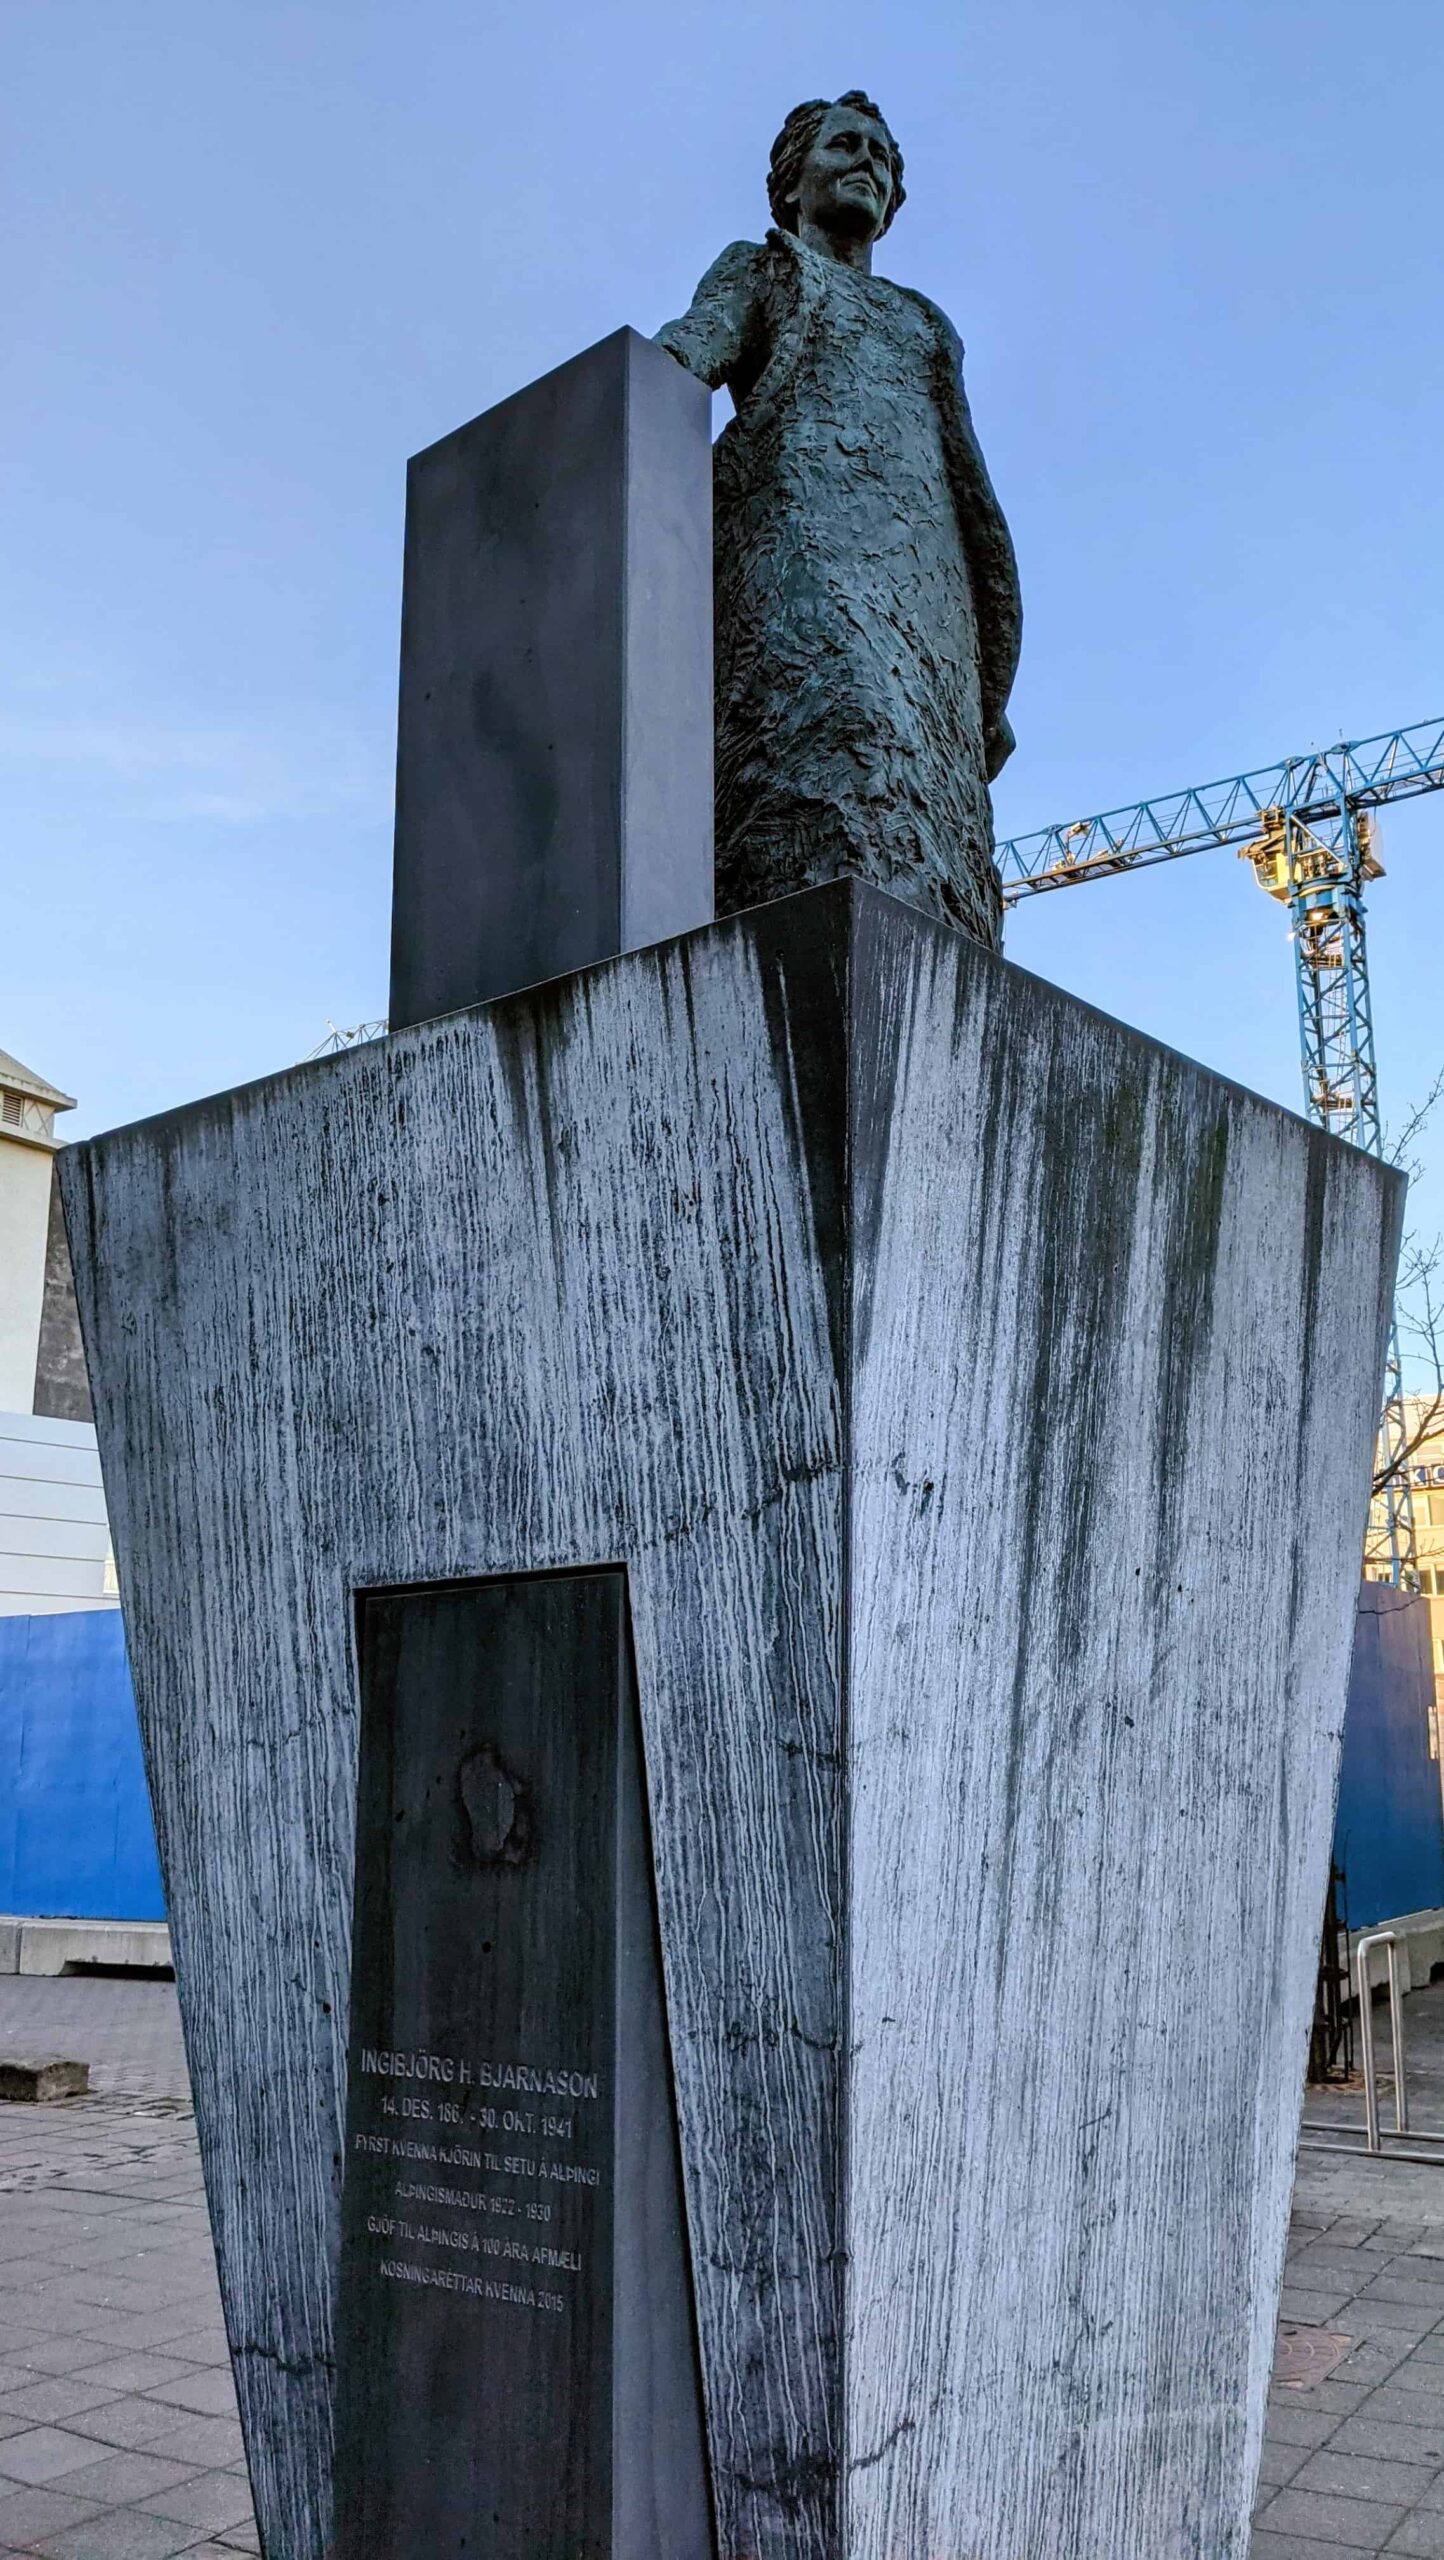 A picture of a statue of Ingibjörg H. Bjarnason in Reykjavik